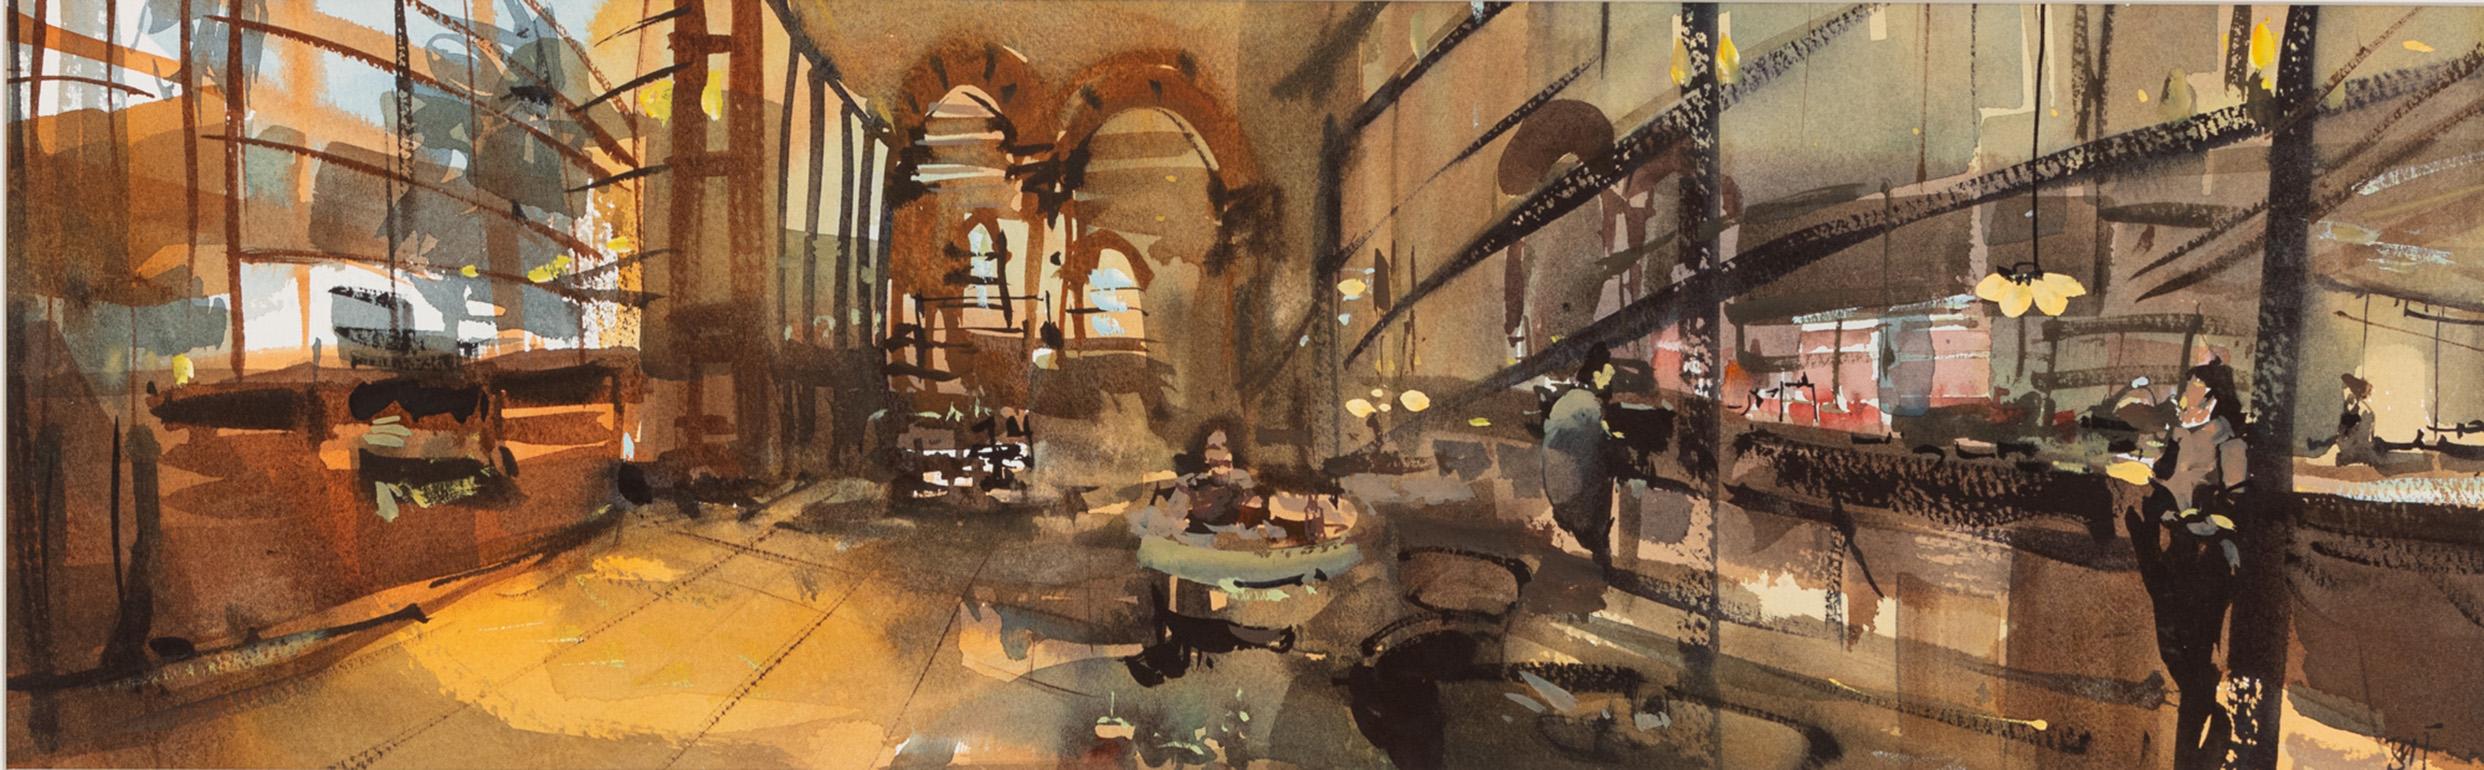 Uma Kelkar Landscape Painting - "Breakfast at Tiffany's" A Watercolor Painting of a Café in Mancester, UK